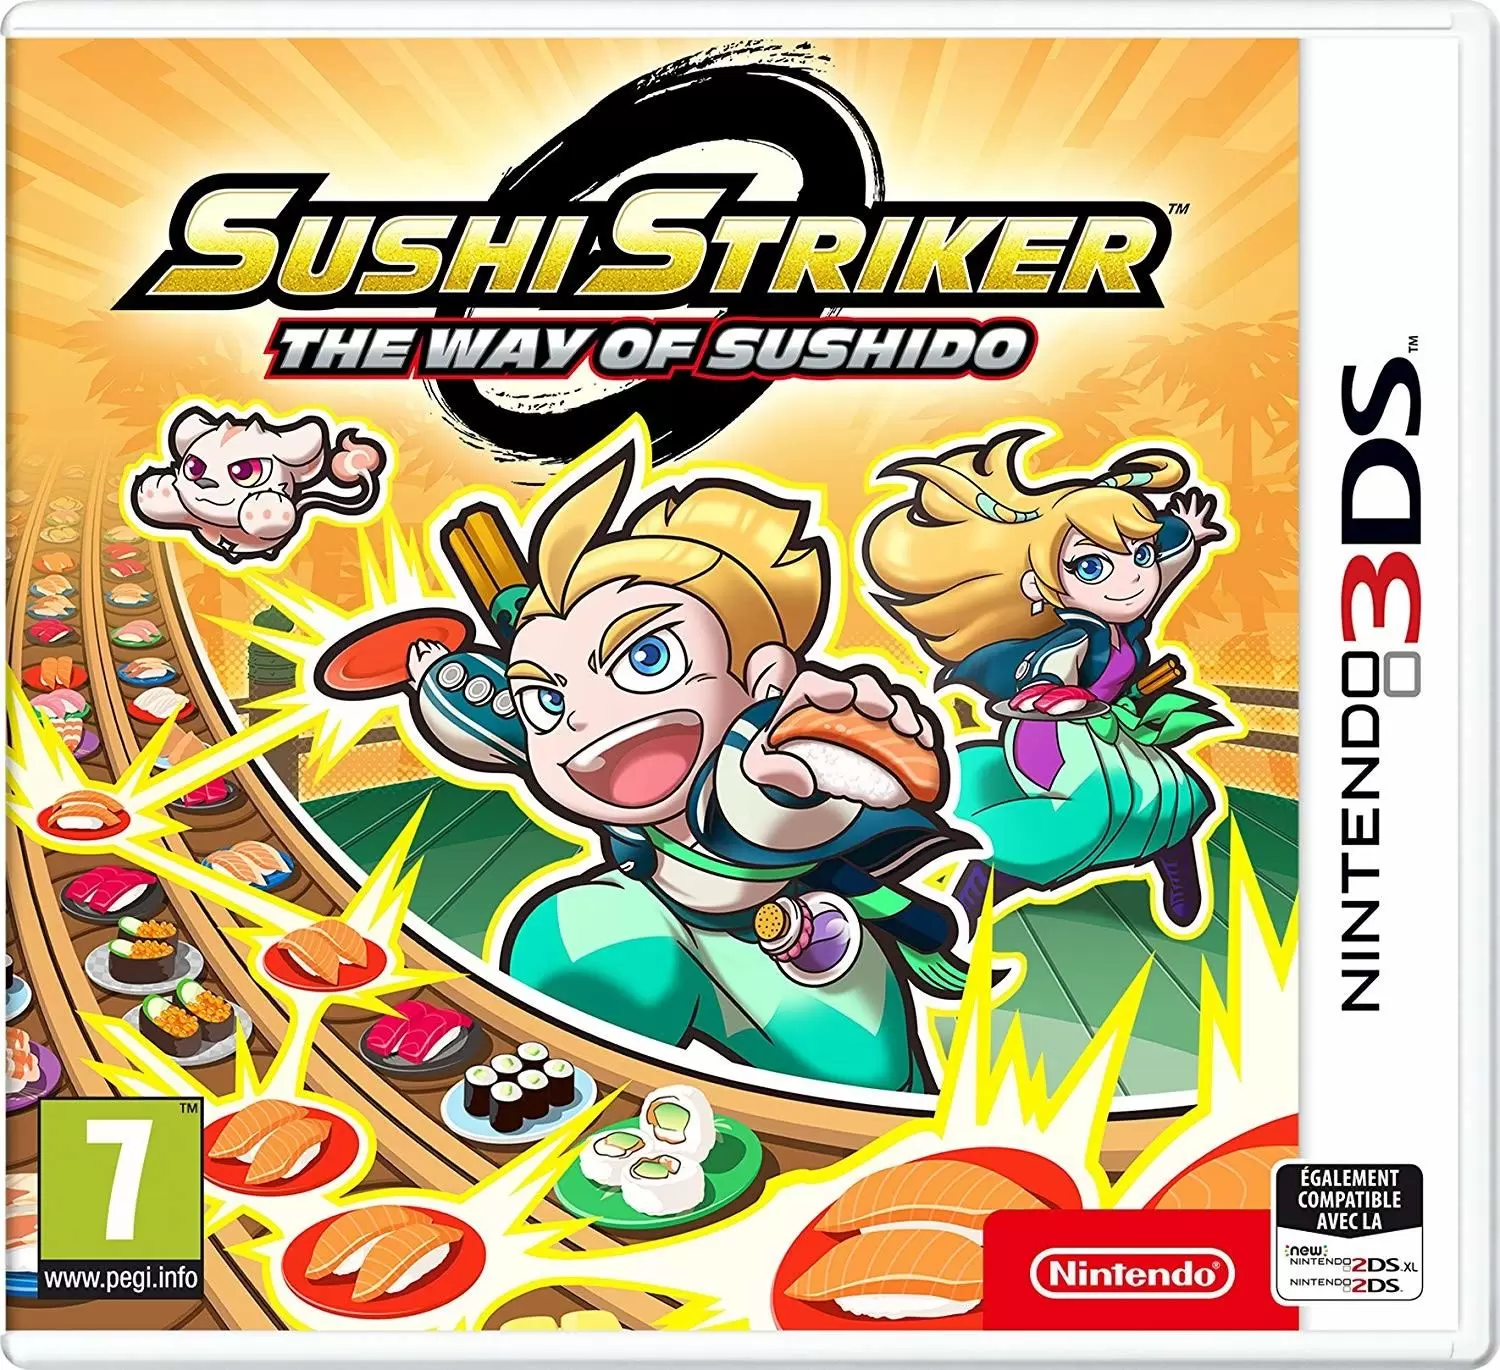 Jeux Nintendo 2DS / 3DS - Sushi Striker The Way of Sushido